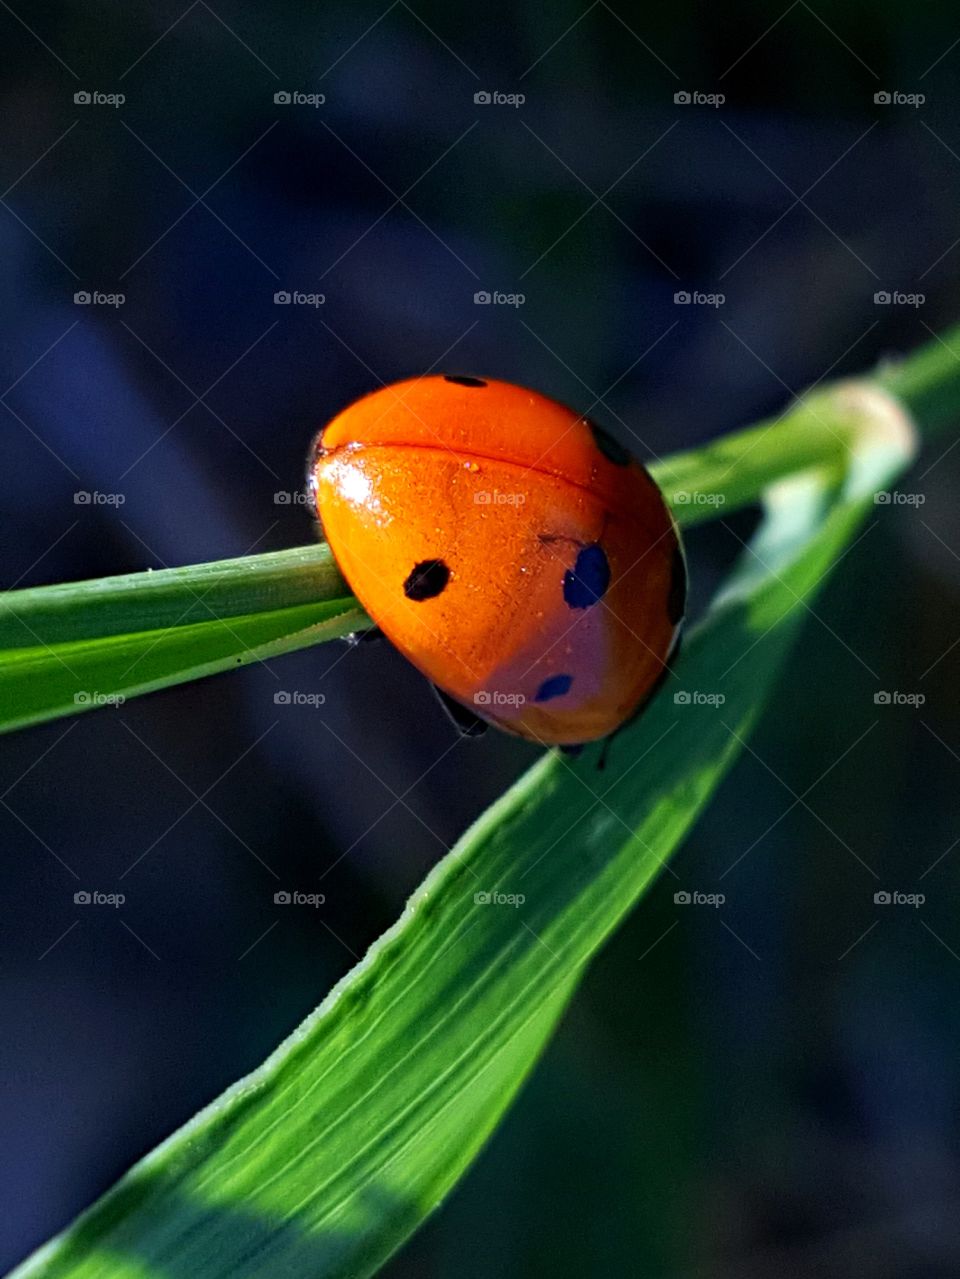 Ladybug on the blade of grass.